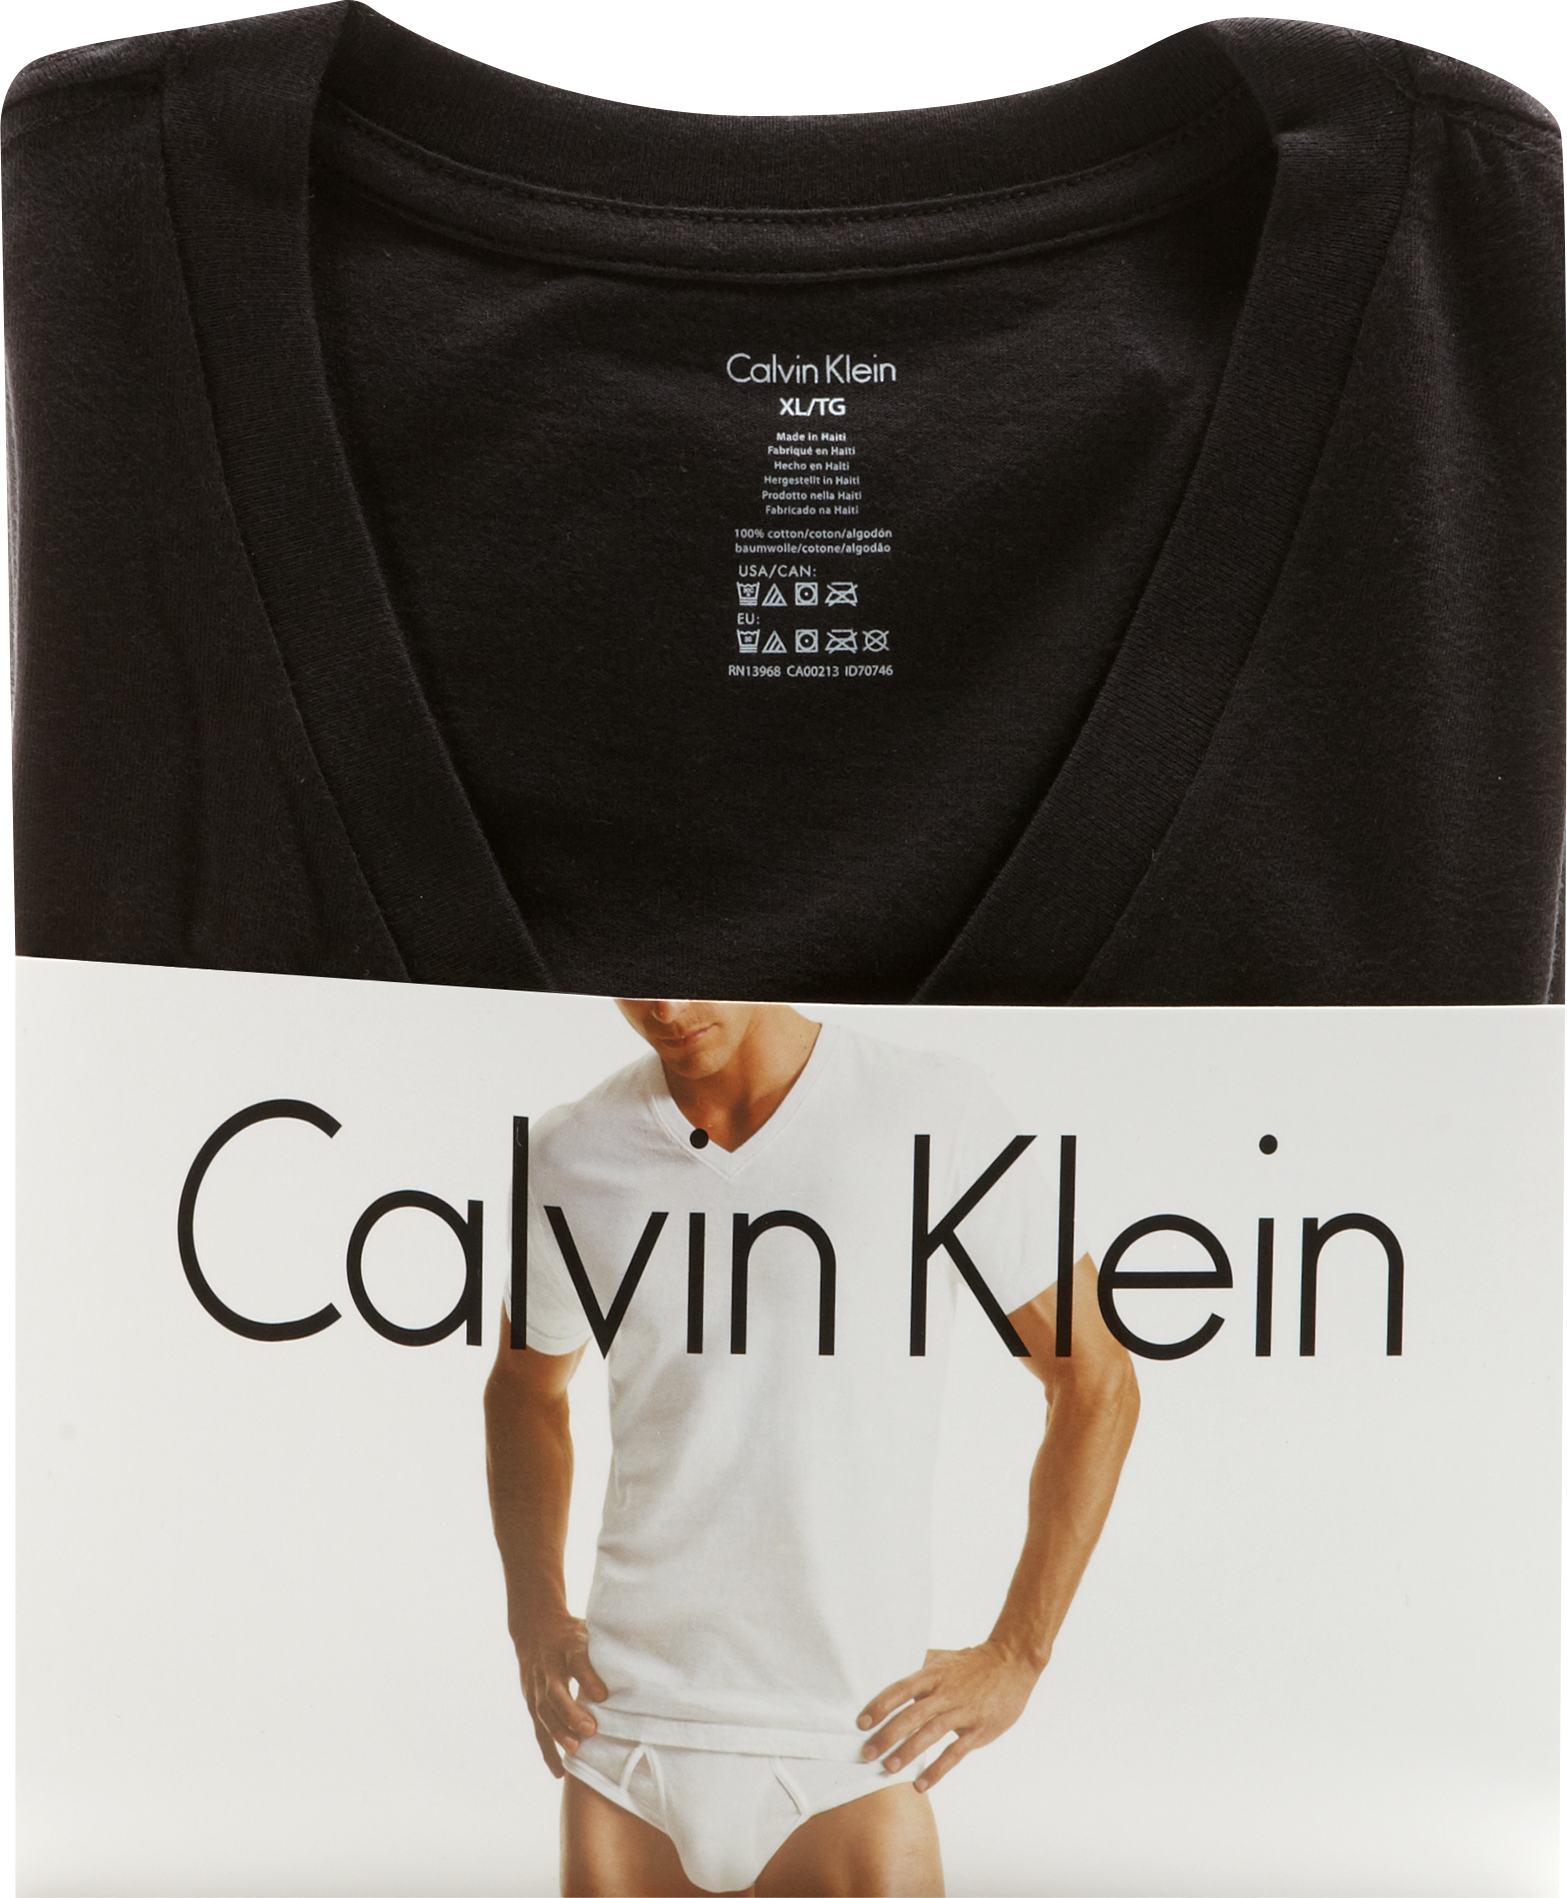 Klein Black Slim-Fit V-Neck T-Shirts (Three-Pack) Men's Sale Men's Wearhouse